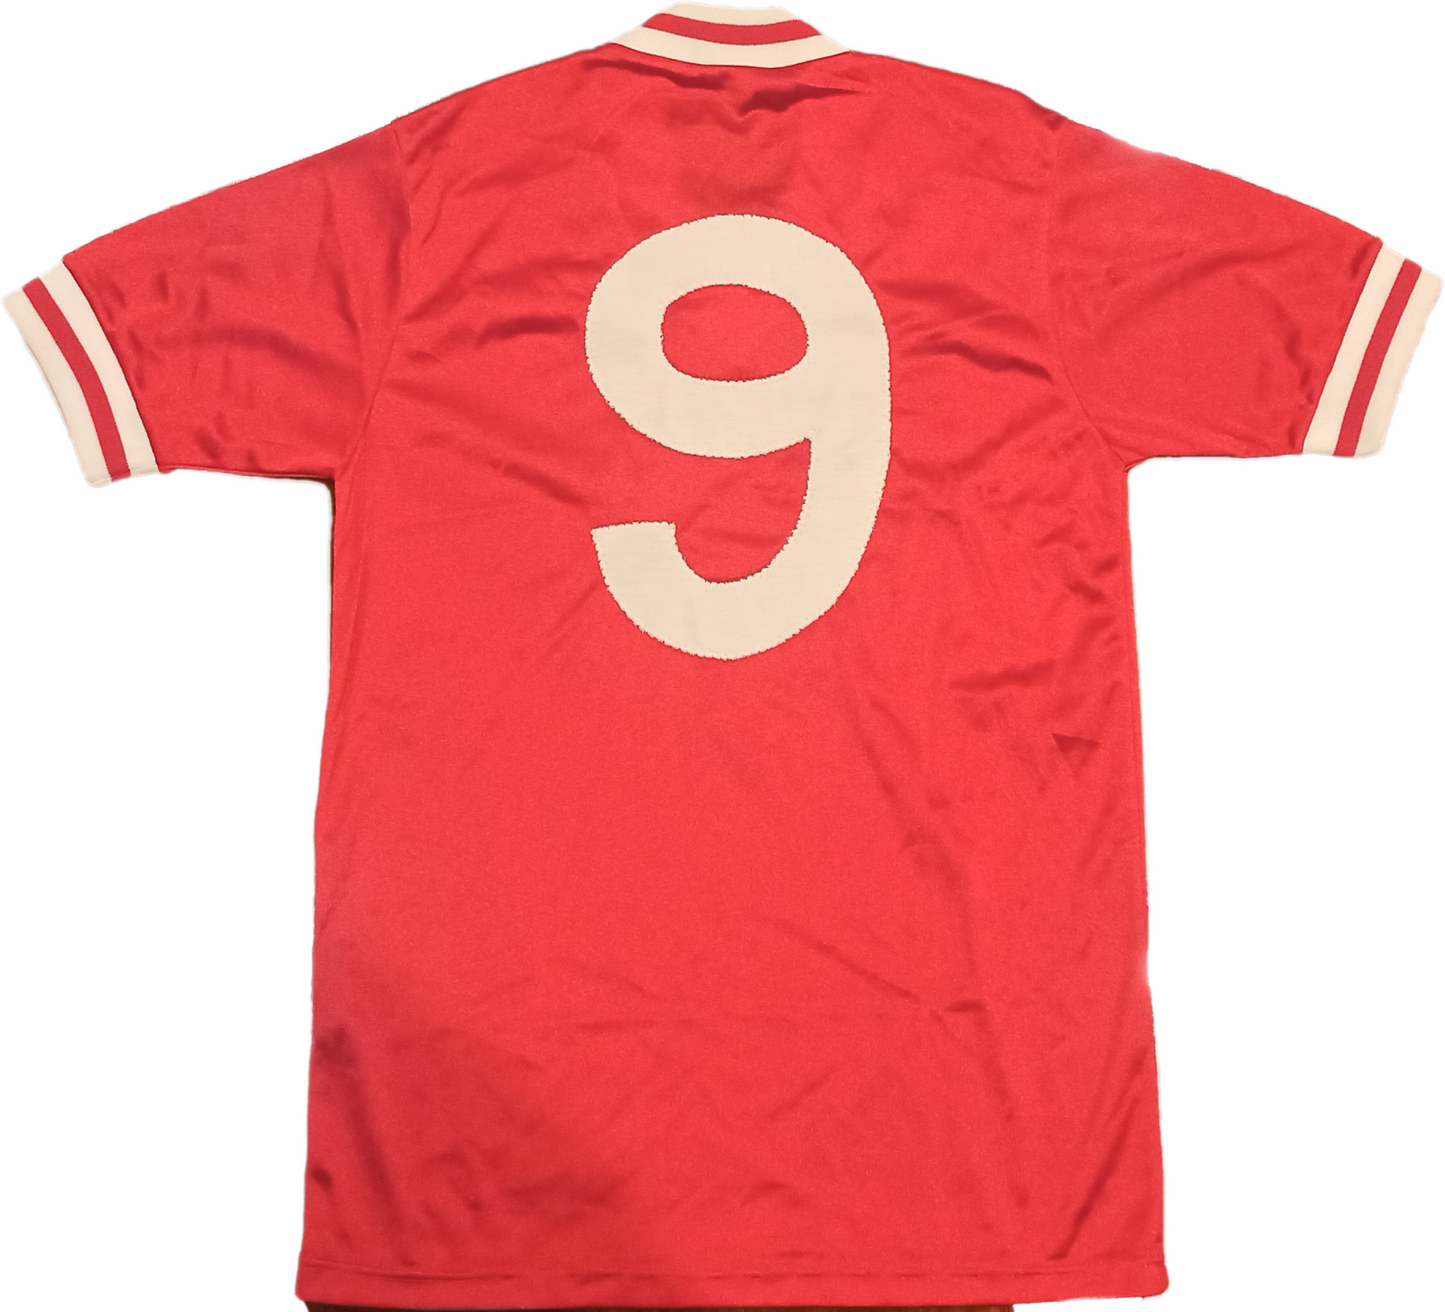 liverpool shirt 1983